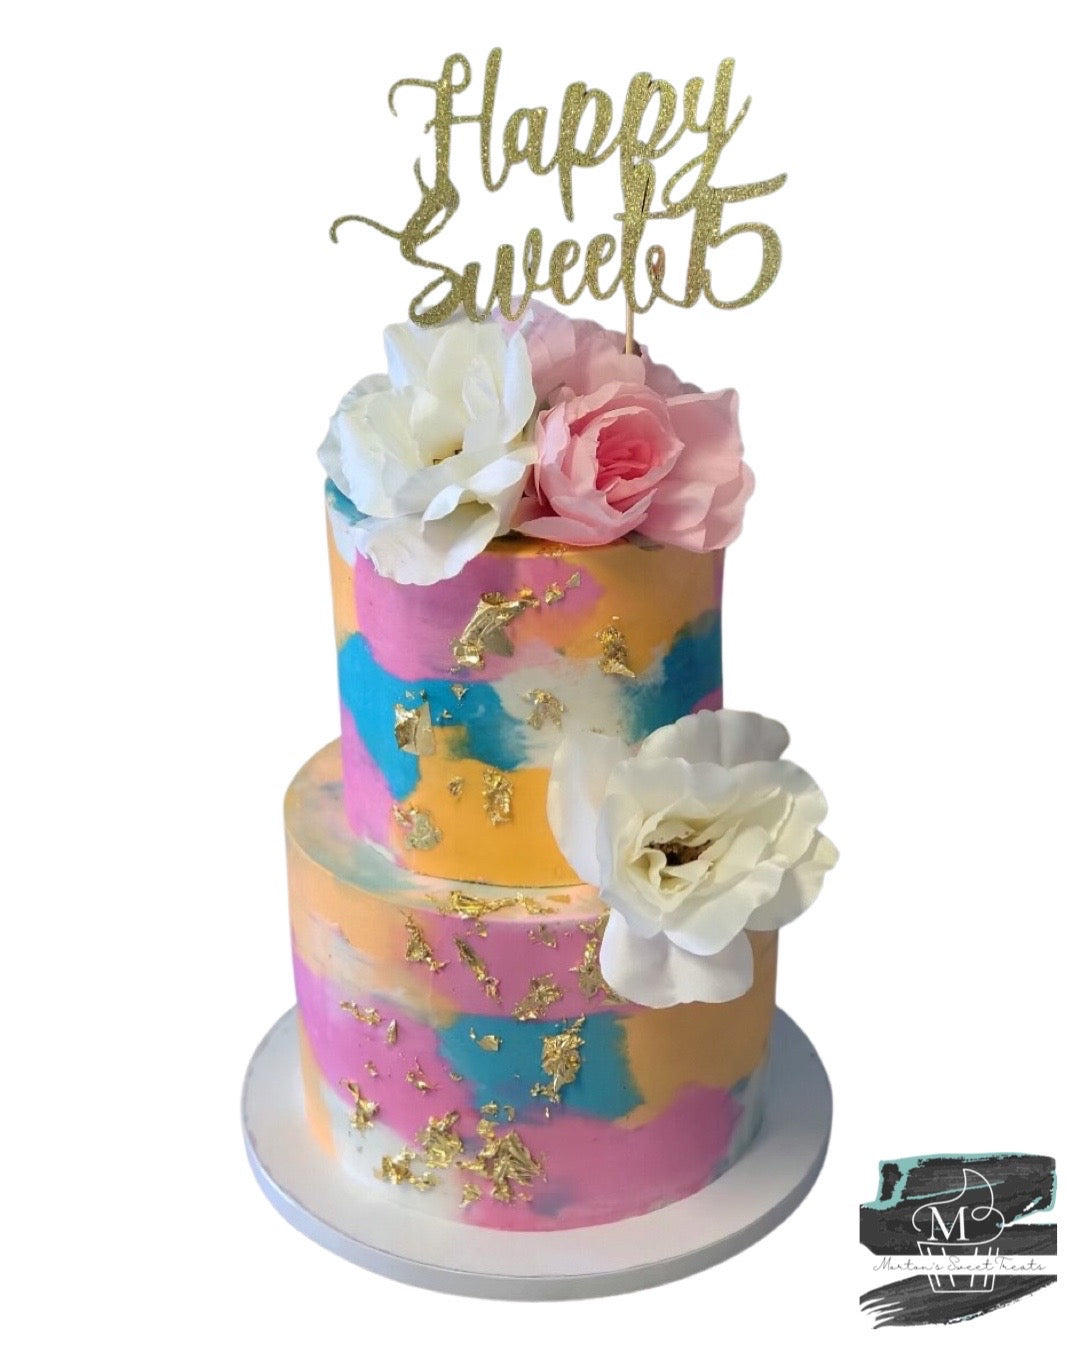 Bespoke Cakes | Perfect Luxury Wedding & Birthday Cakes | Jack and Beyond